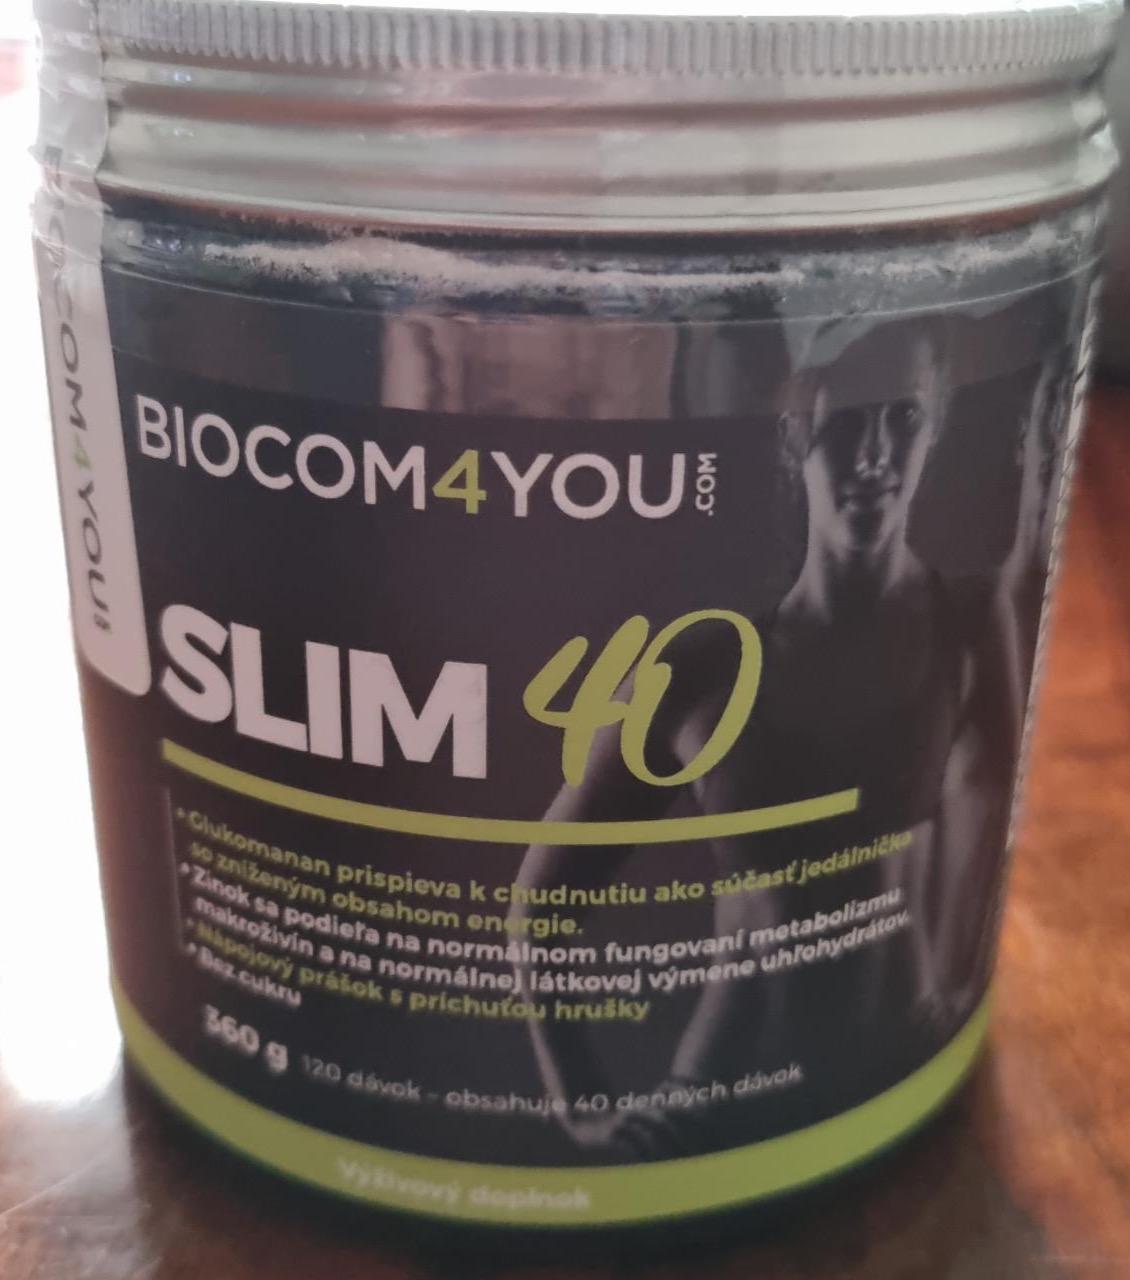 Képek - Slim 40 - körte Biocom4you